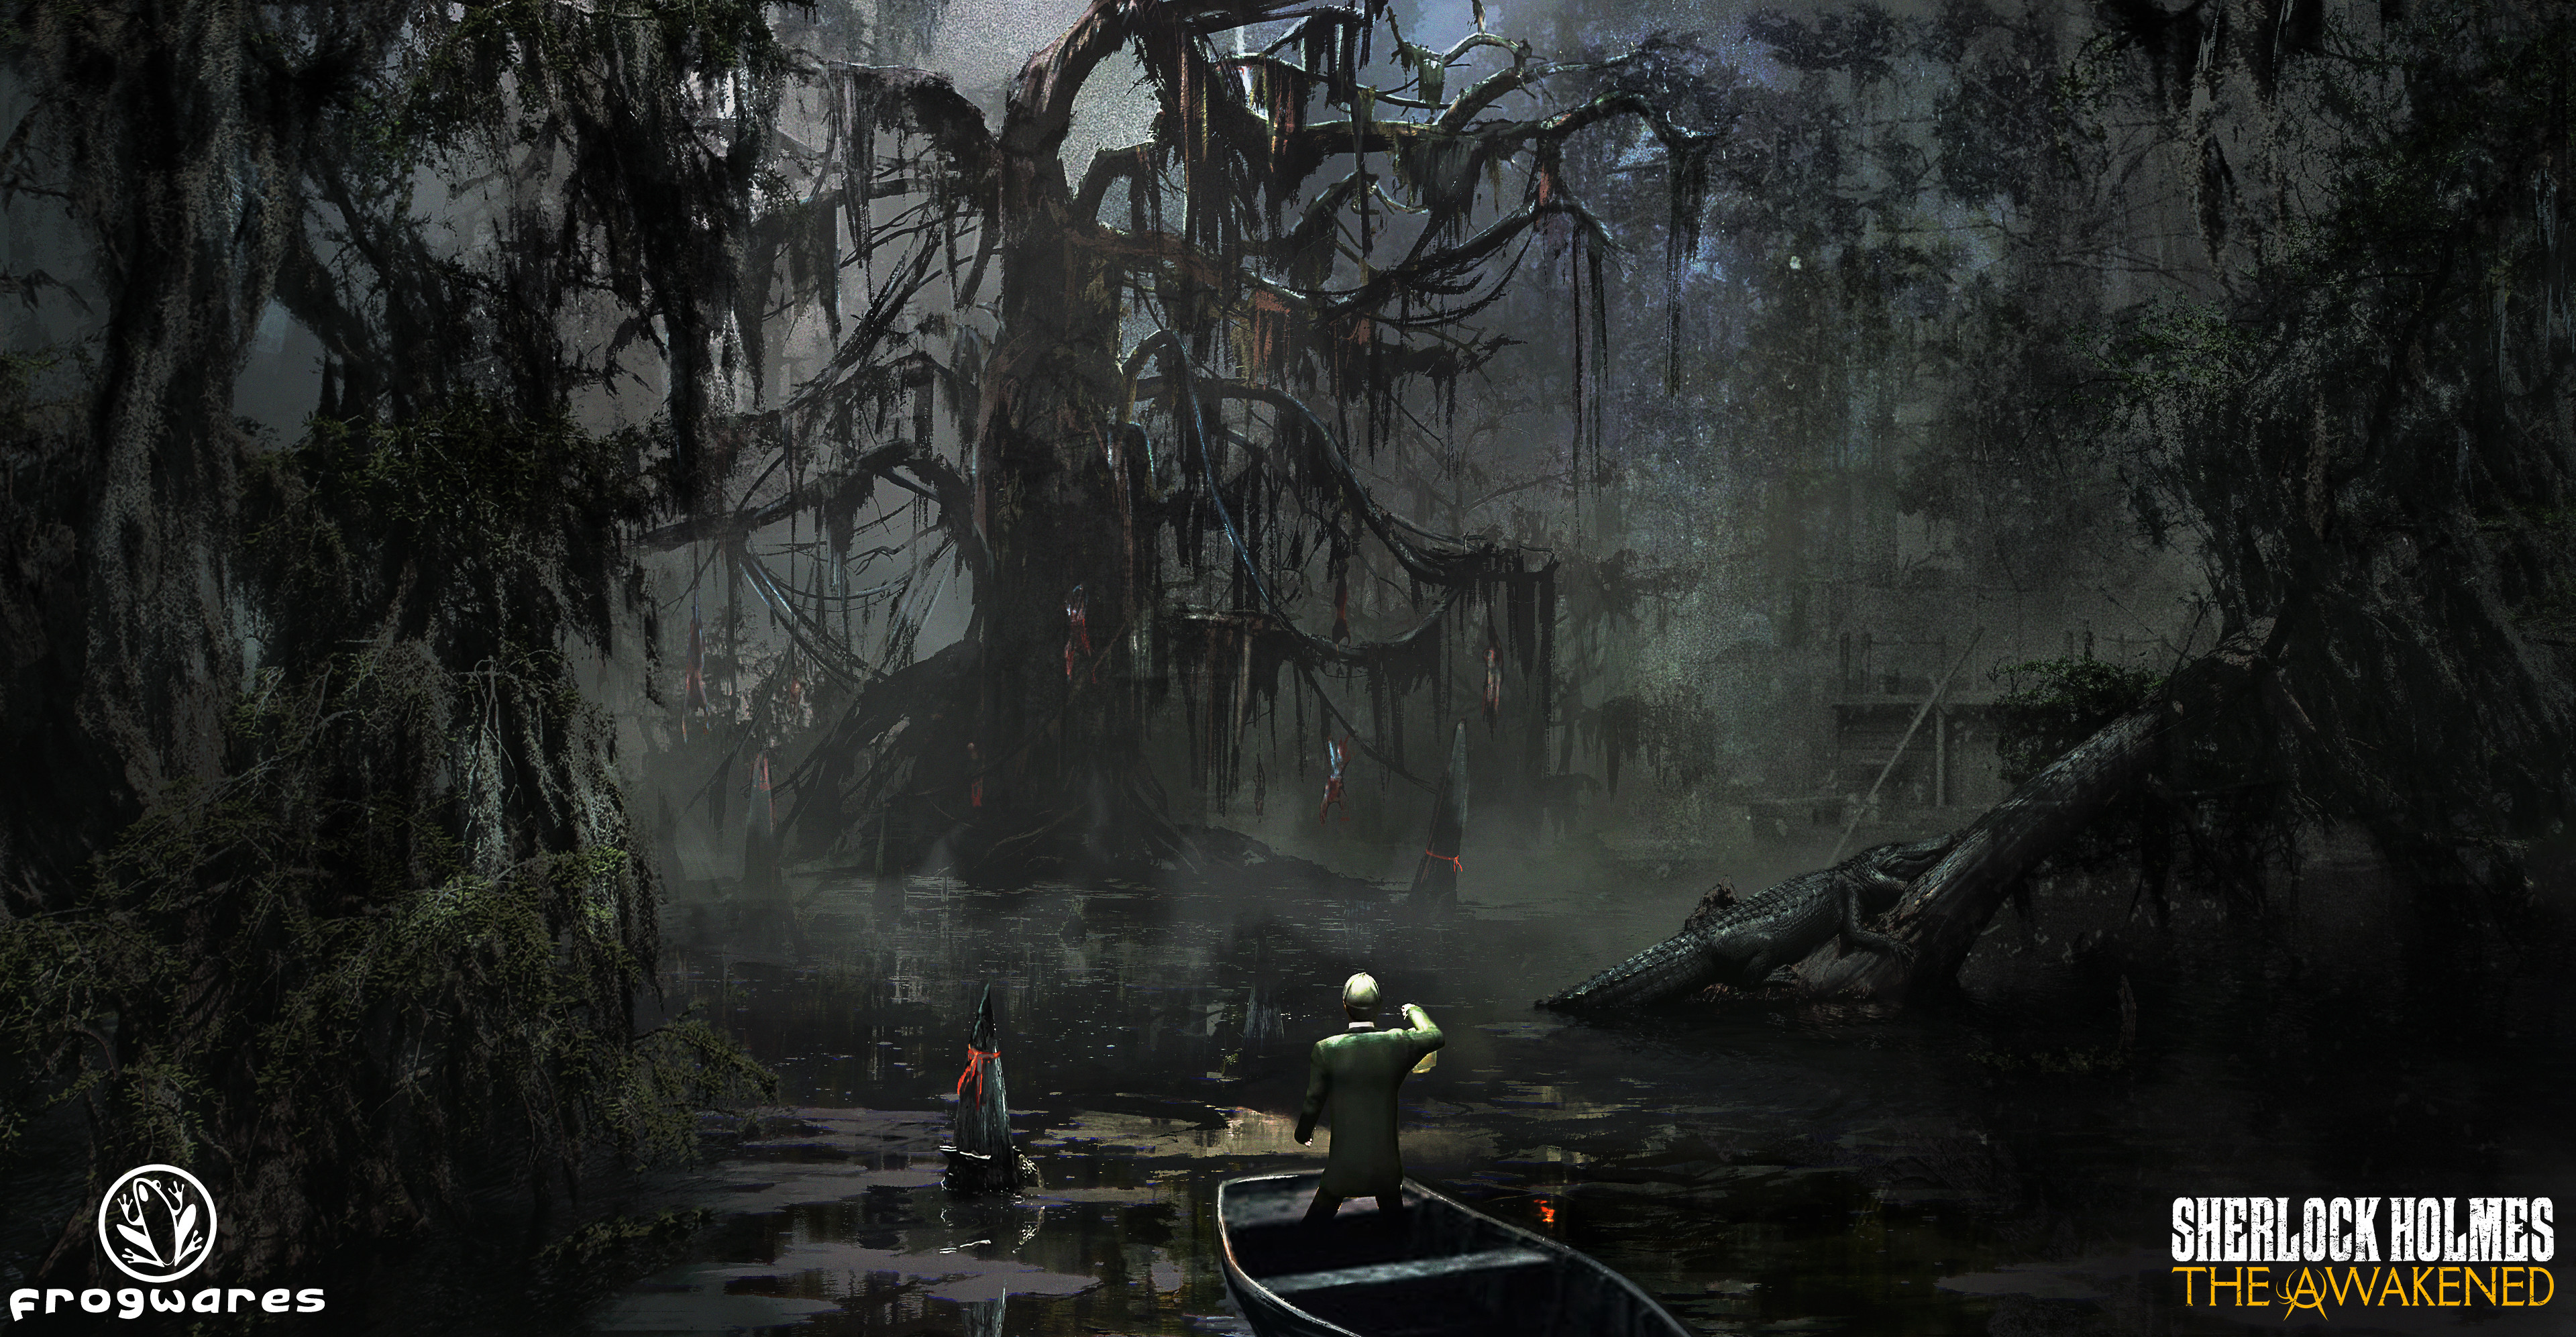 (Louisiana) Overgrown dark swamp